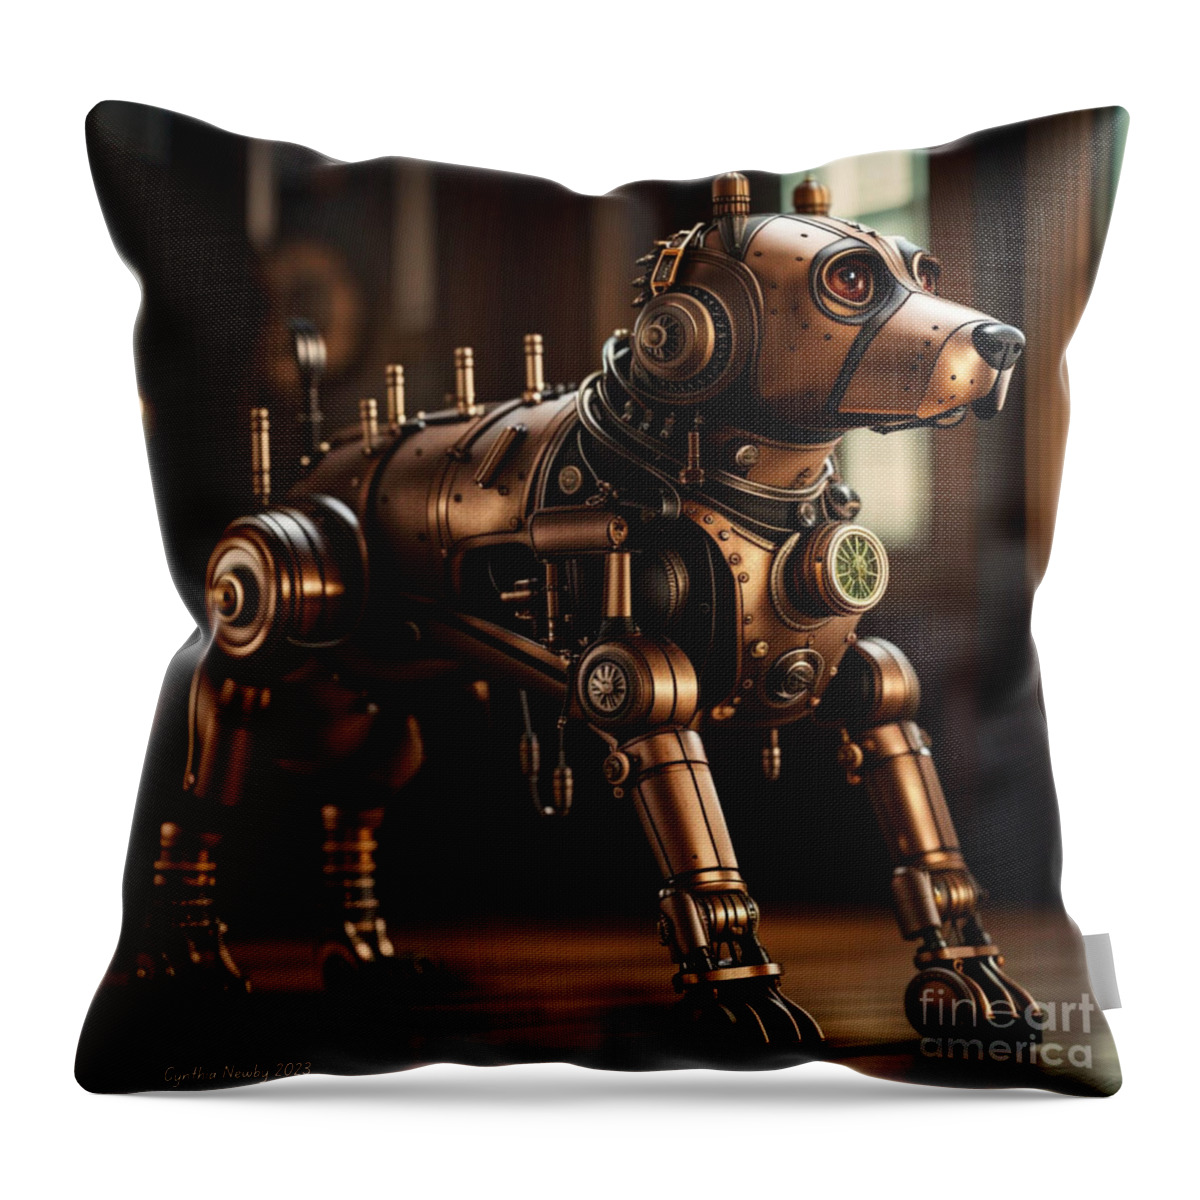 Ai Throw Pillow featuring the digital art Steampunk Dog by Cindy's Creative Corner